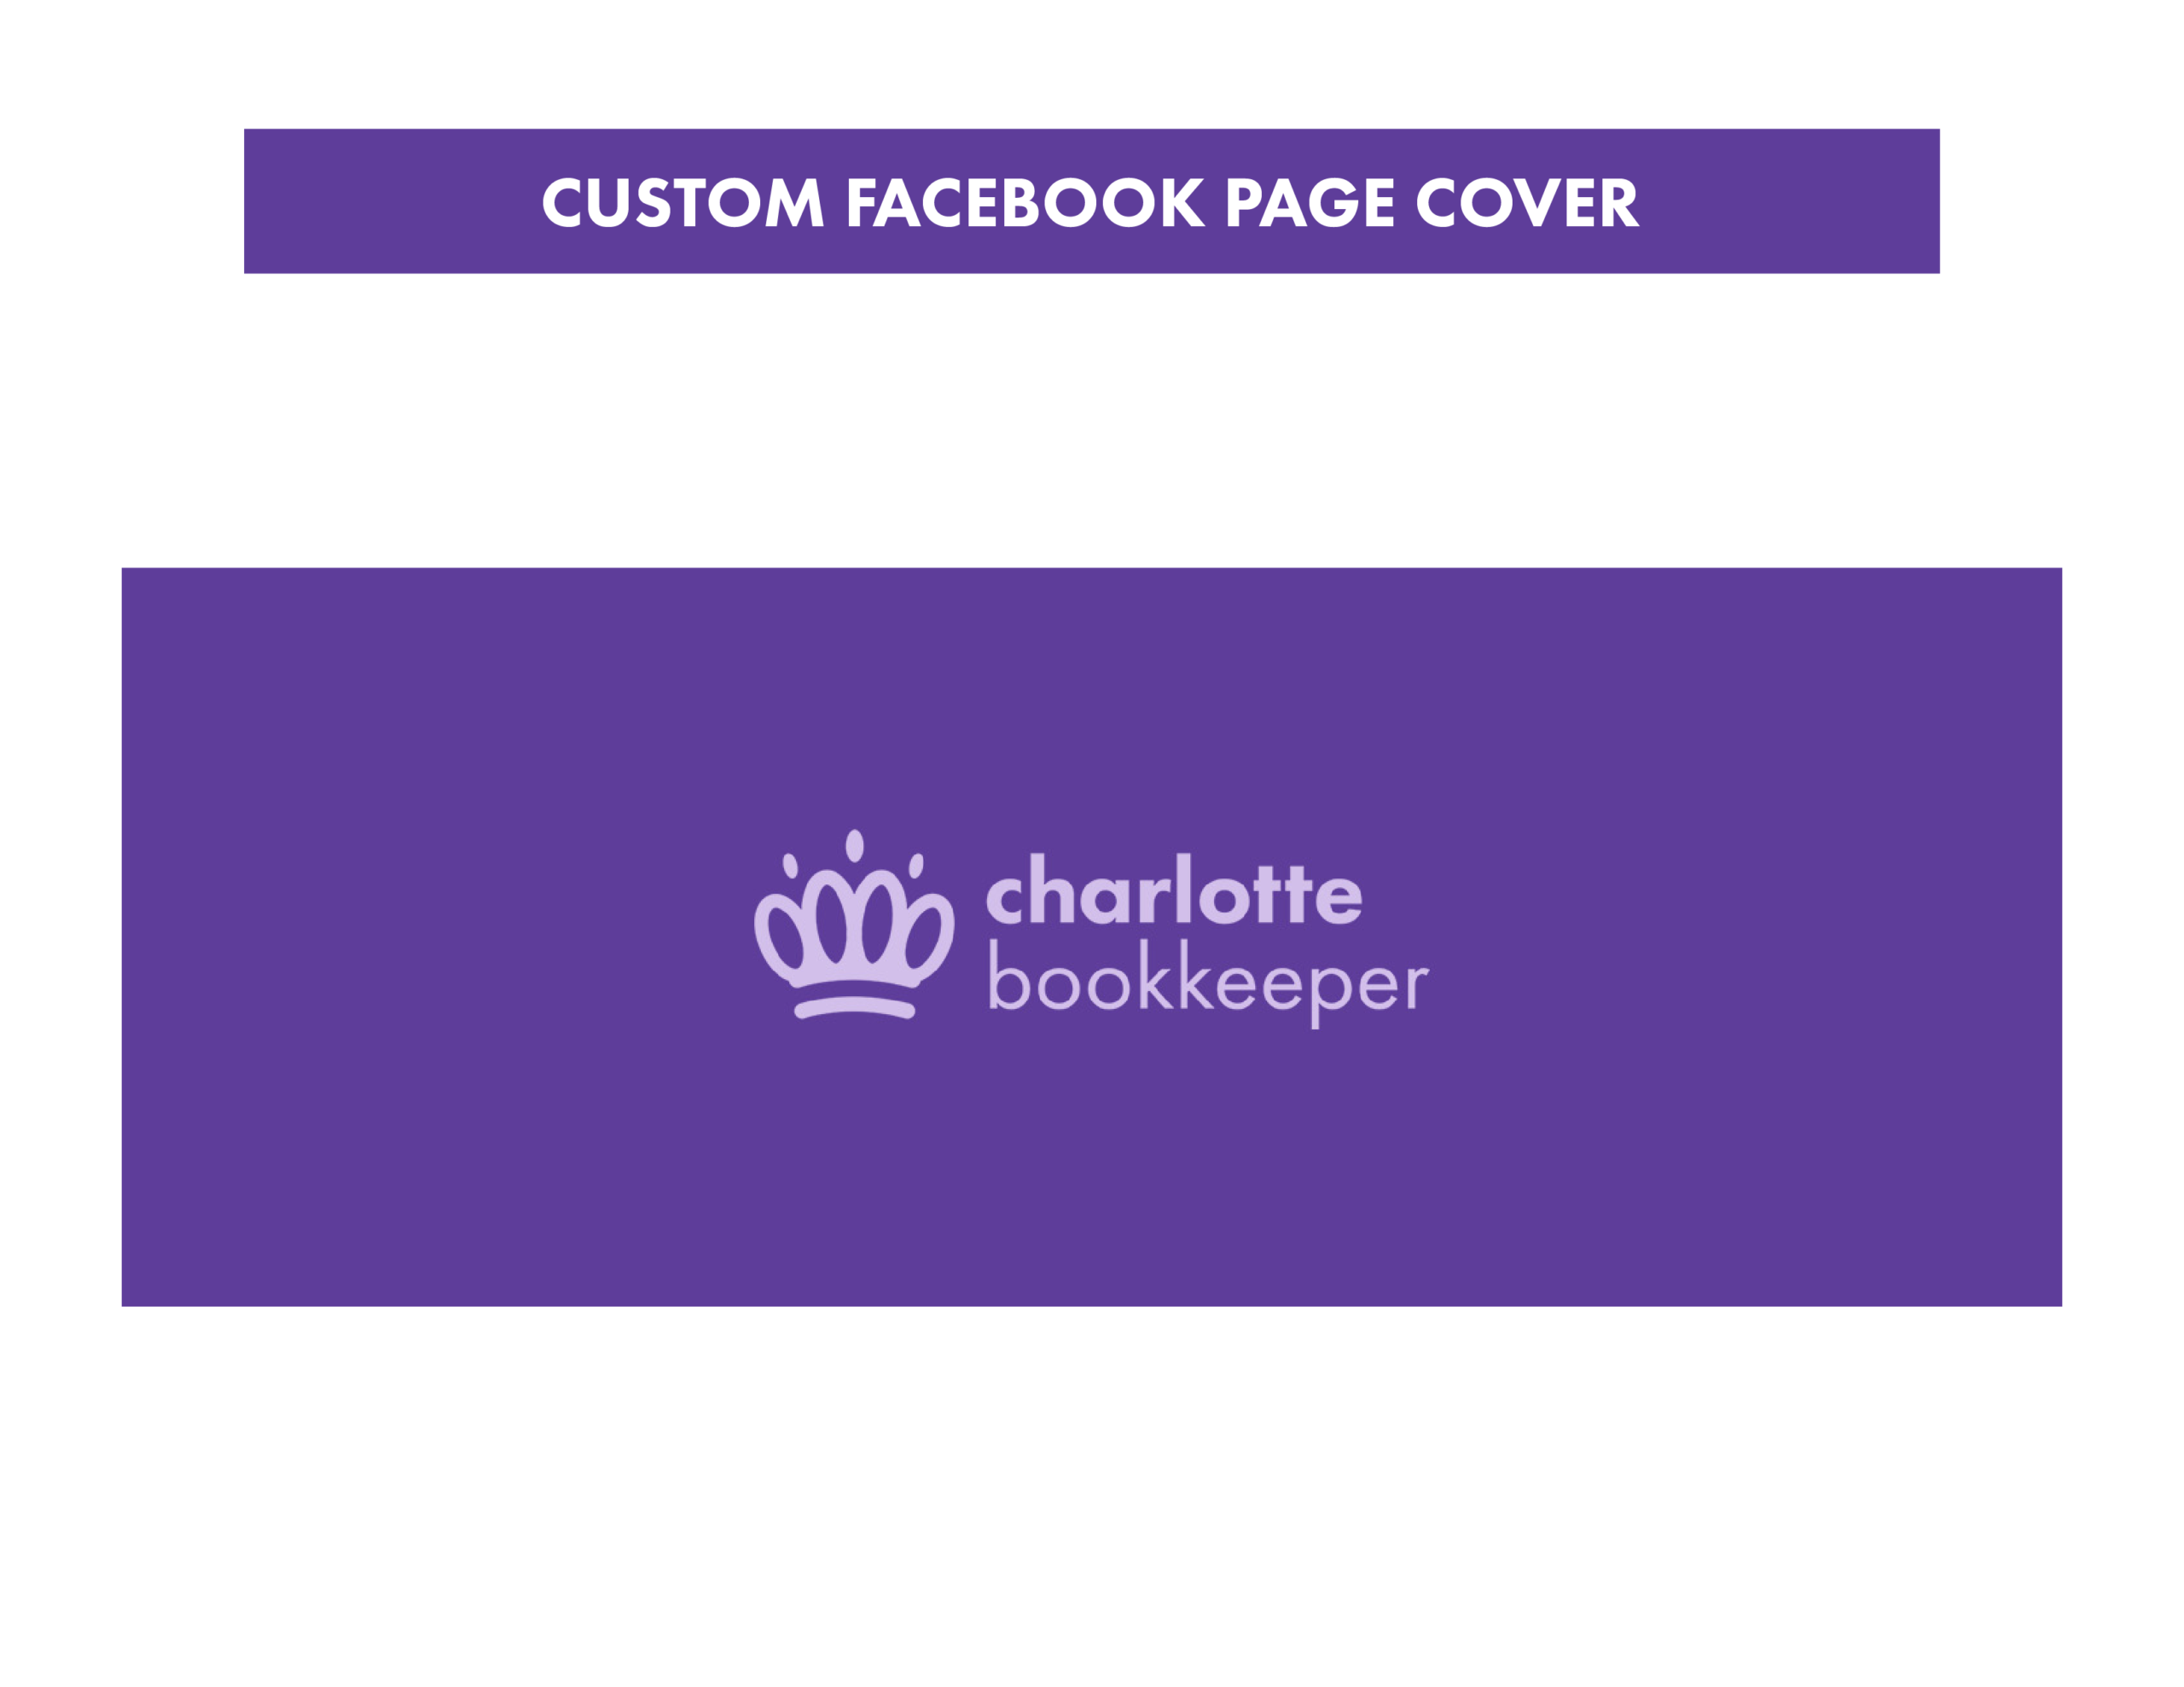 06CharlotteBK_Showcase_Custom Facebook Page Cover